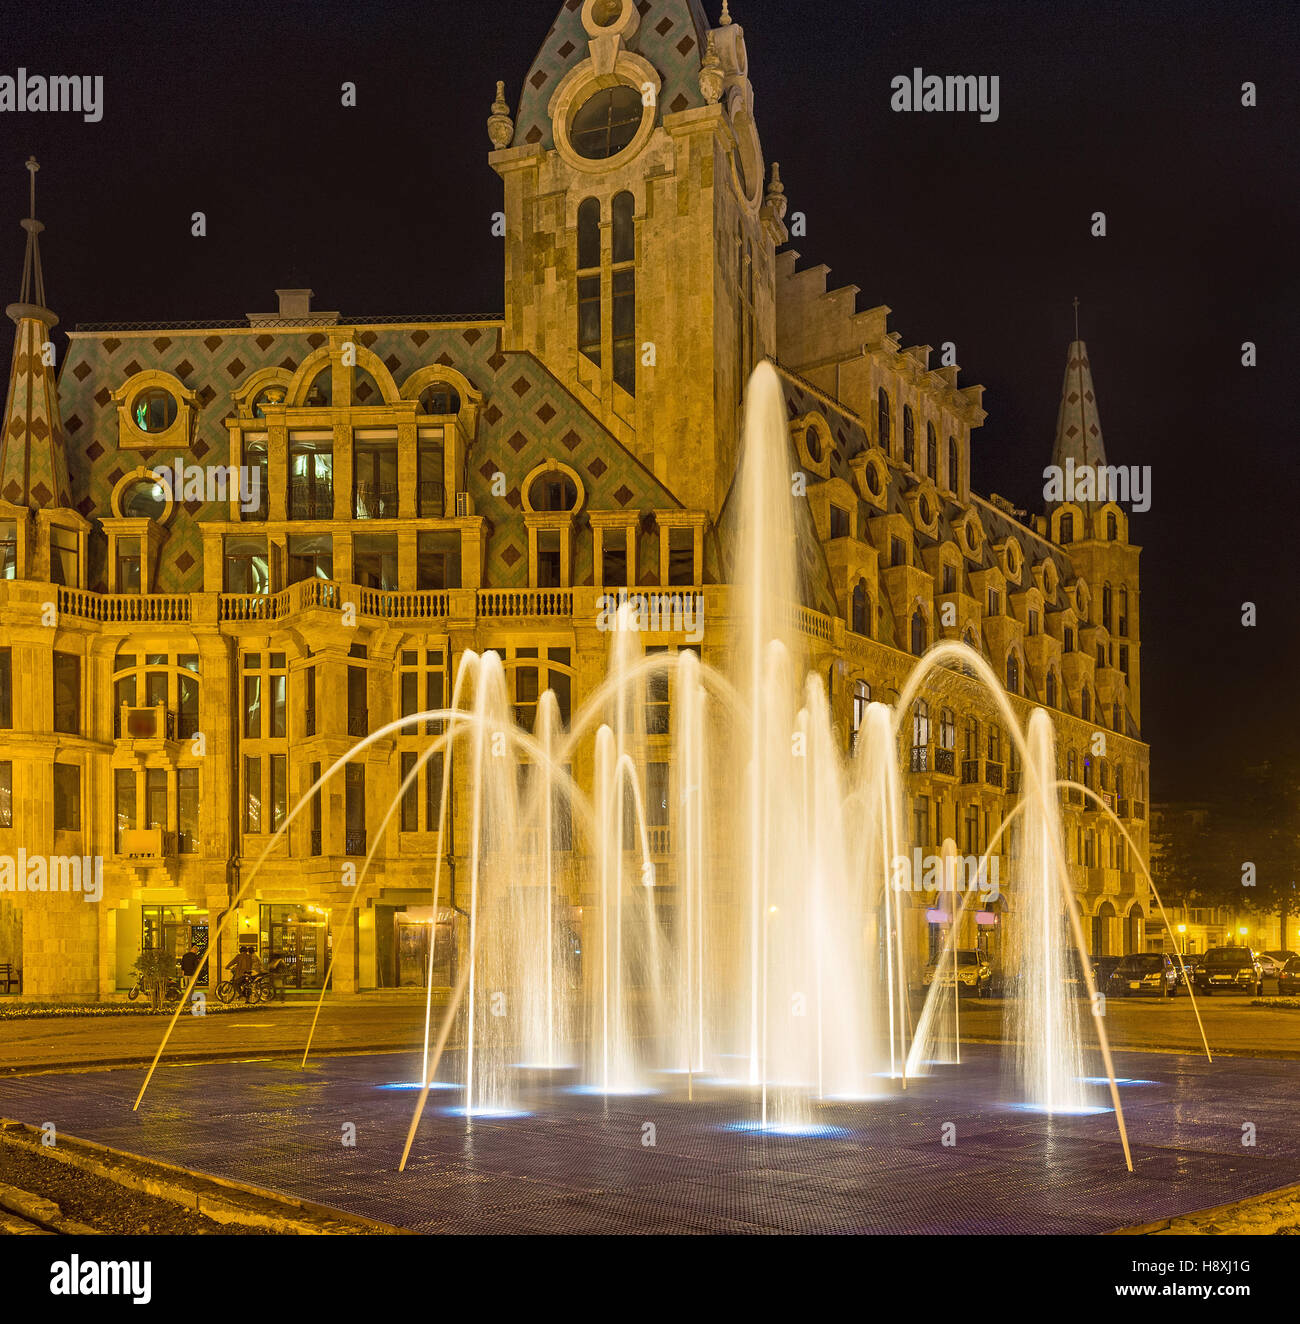 The beautiful fountain in the Europe Square of Batumi, Georgia. Stock Photo